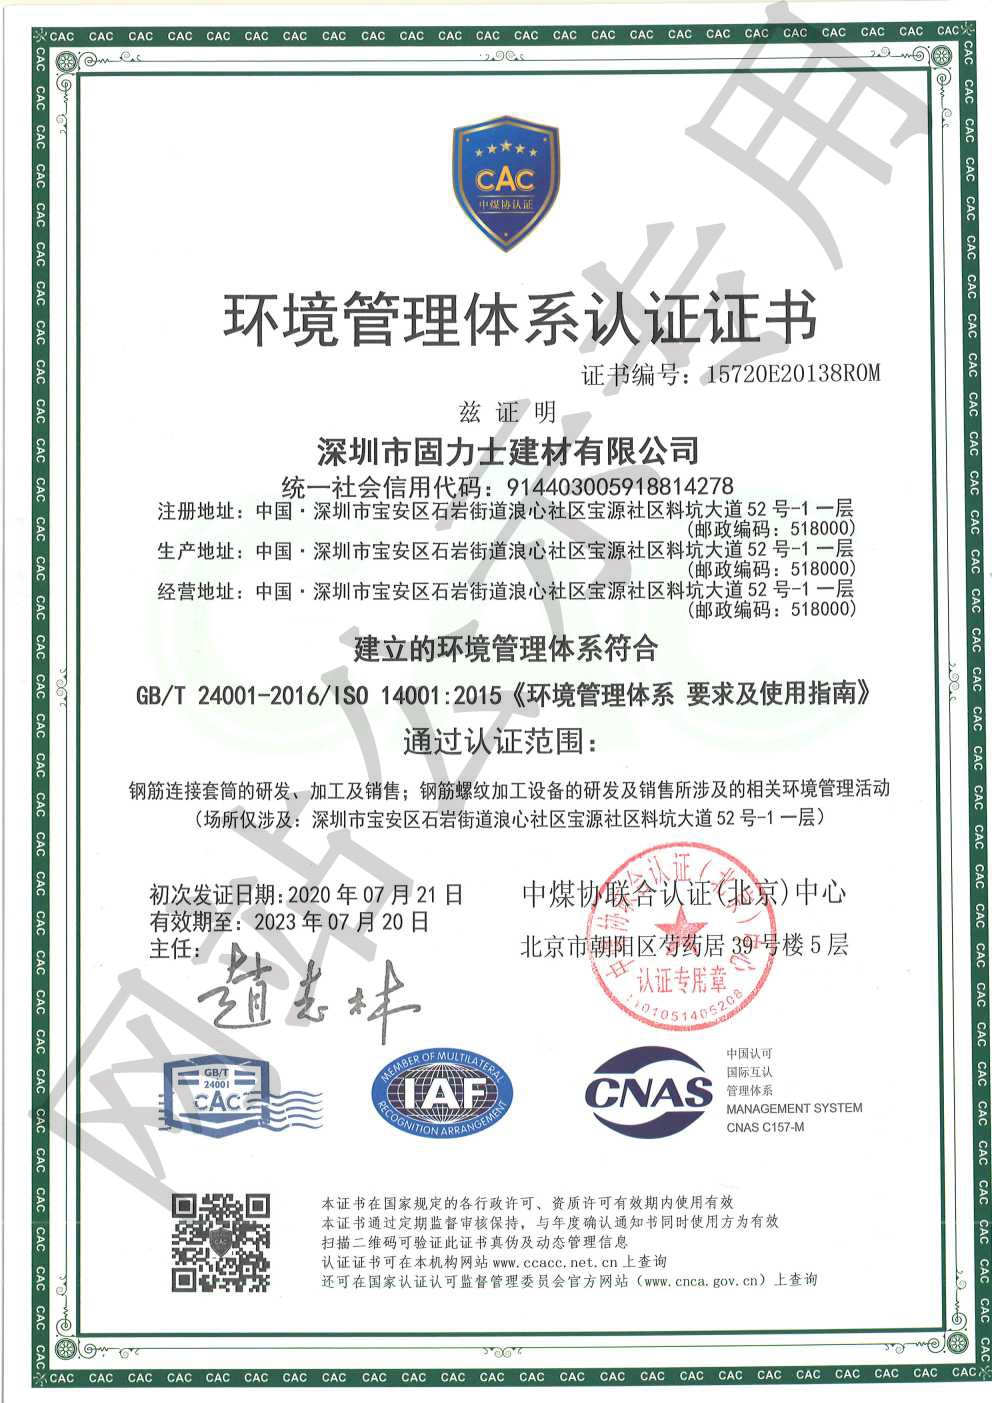 翔安ISO14001证书